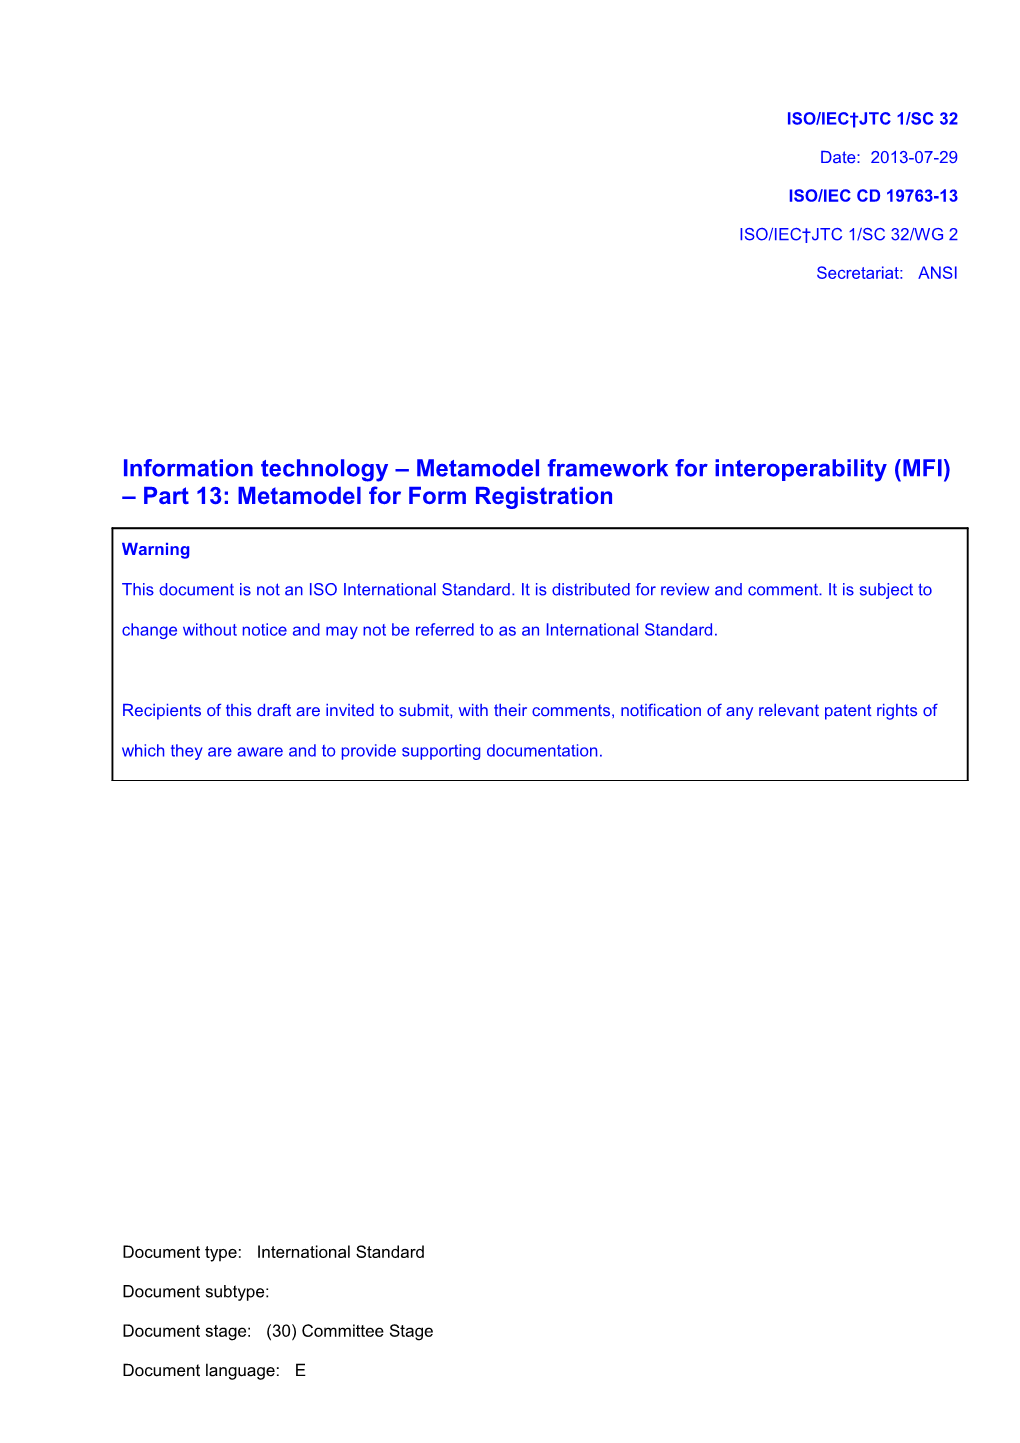 Information Technology Metamodel Framework for Interoperability (MFI) Part 13: Metamodel